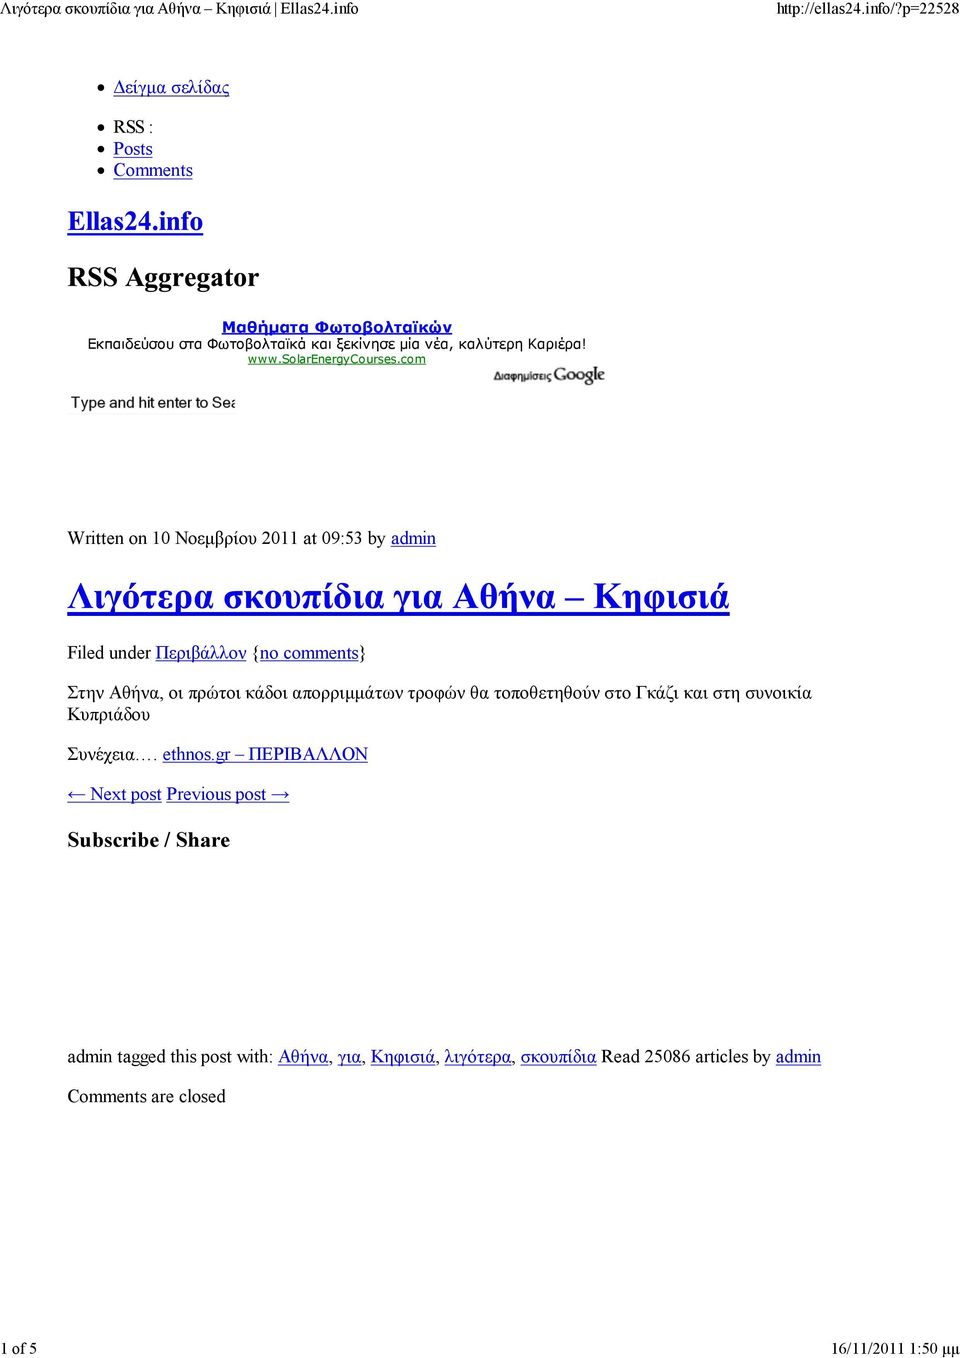 com Written on 10 Νοεμβρίου 2011 at 09:53 by admin Filed under Περιβάλλον {no comments} Στην Αθήνα, οι πρώτοι κάδοι απορριμμάτων